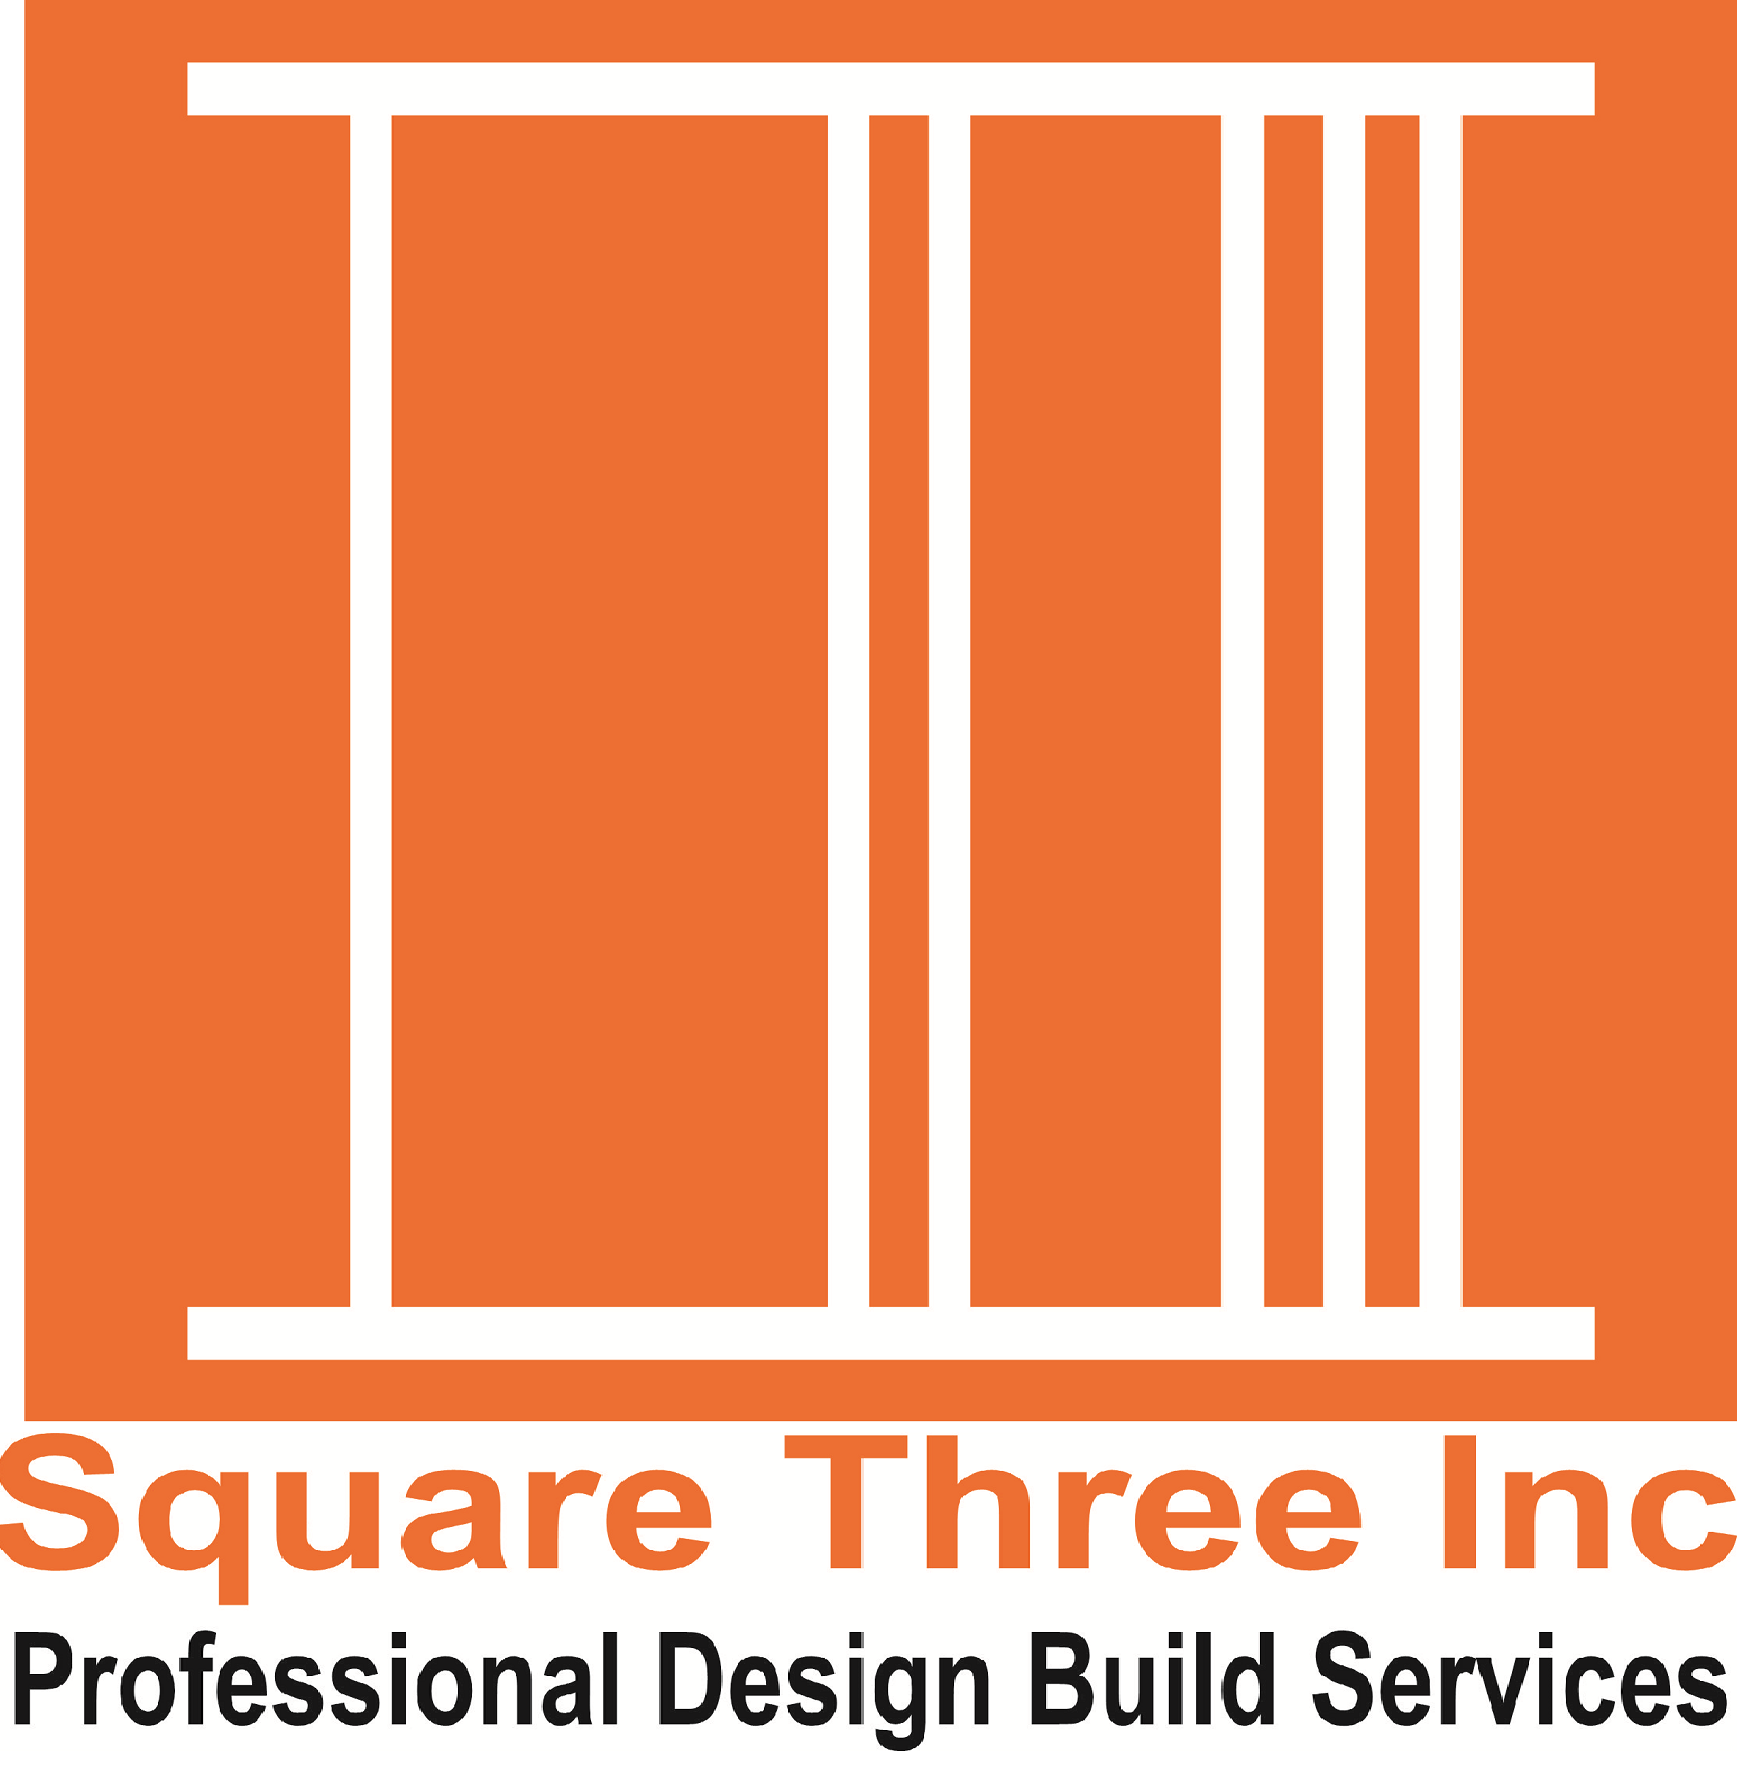 Square Three Inc